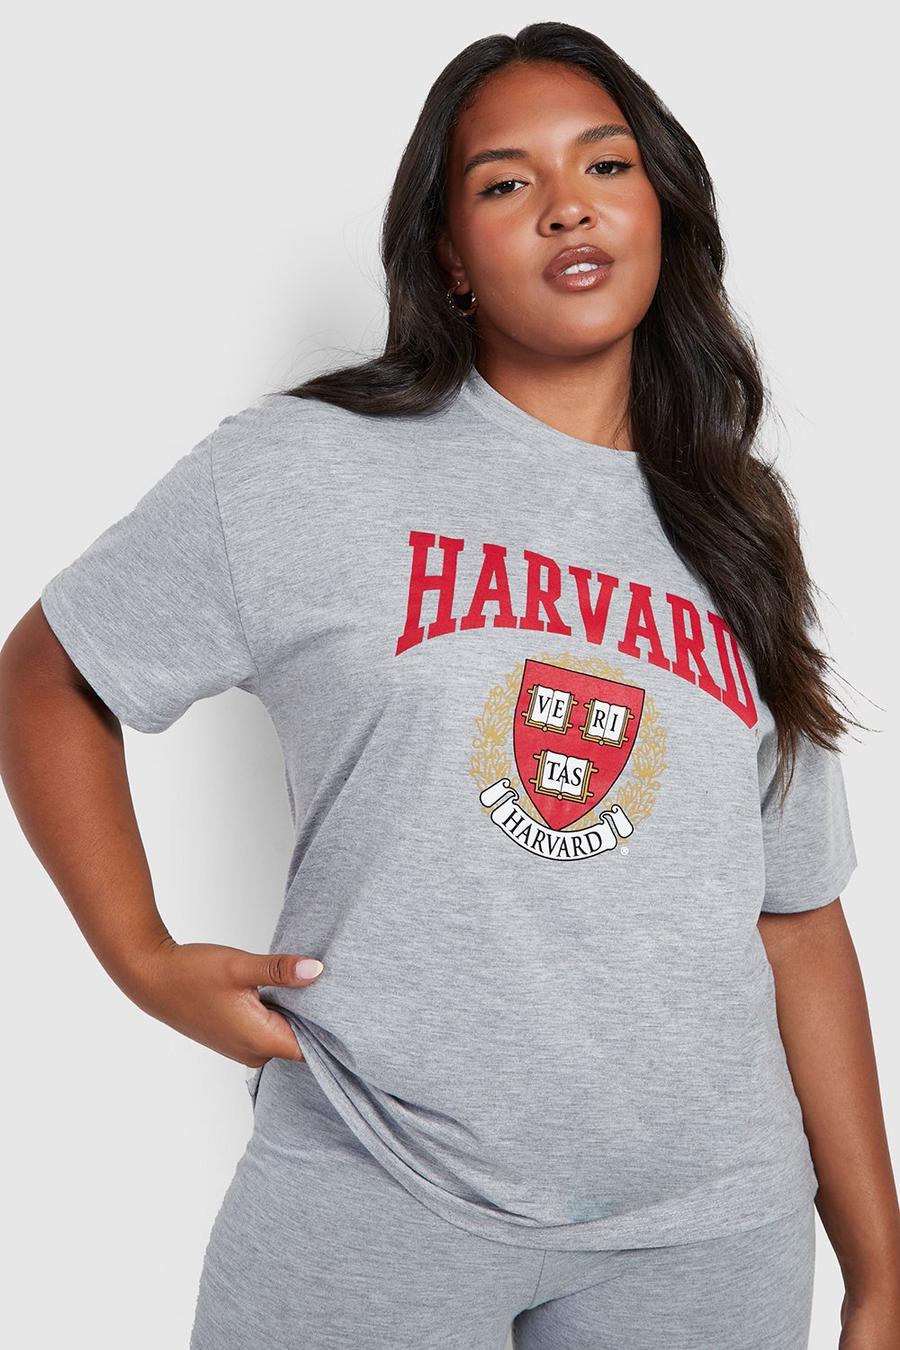 T-shirt Plus Size ufficiale Harvard, Grey grigio